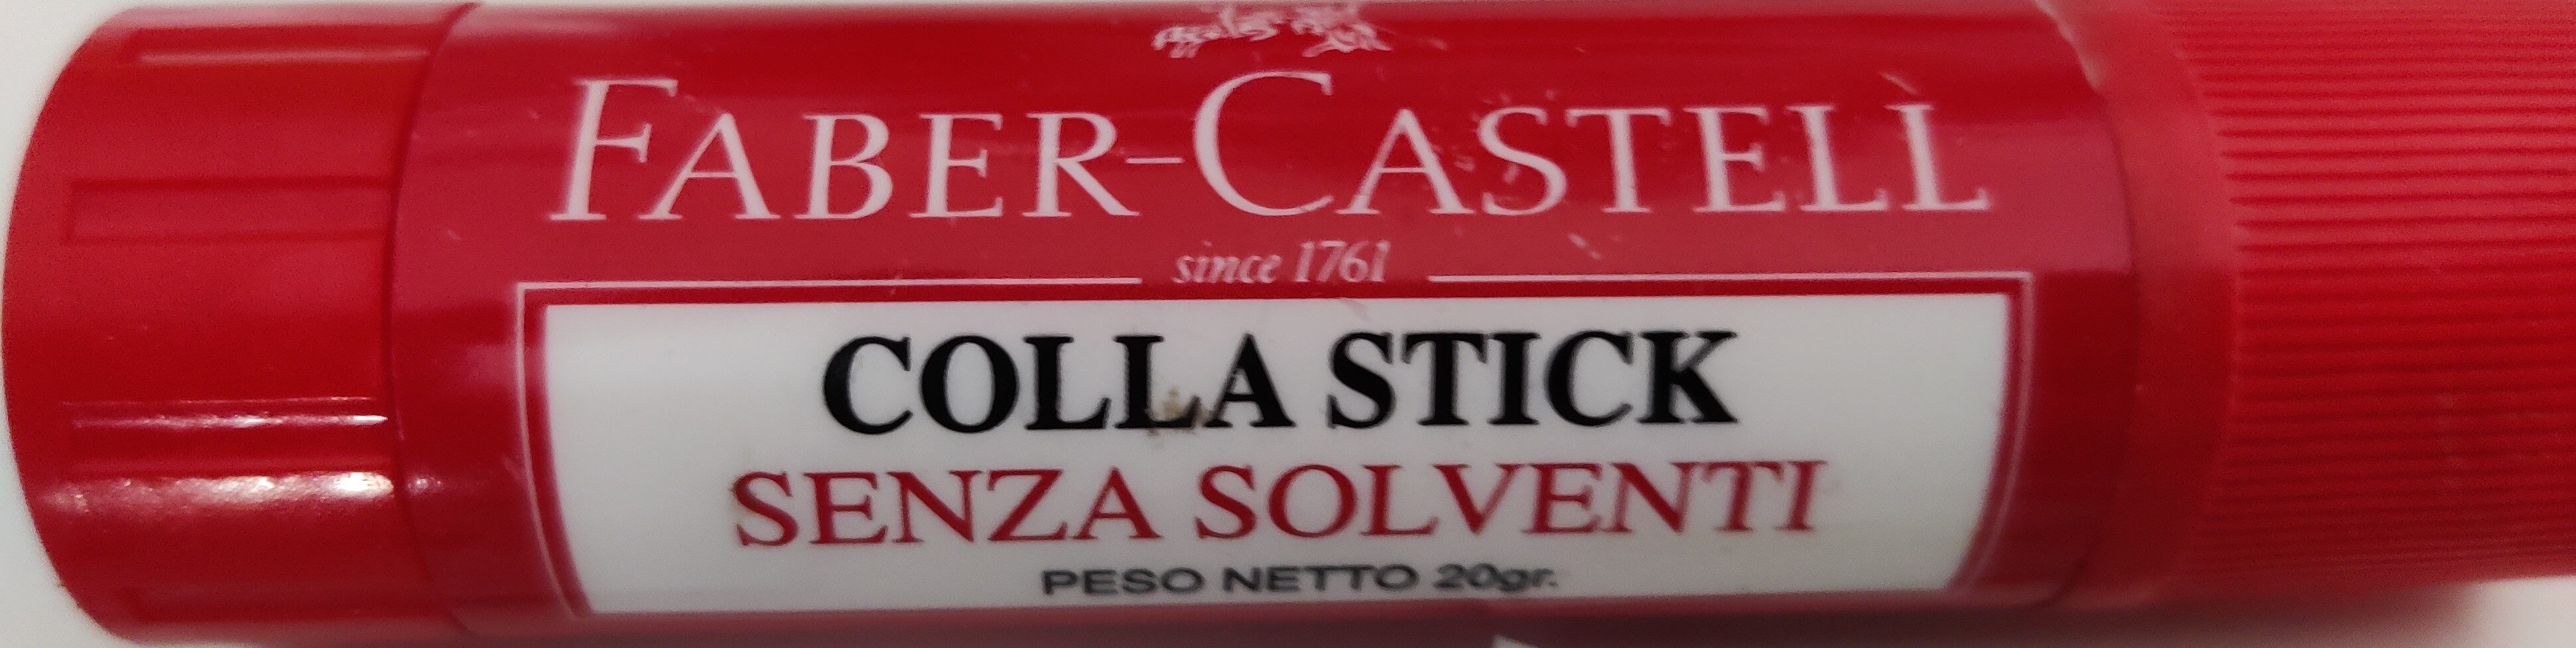 Colla stick - Product - it